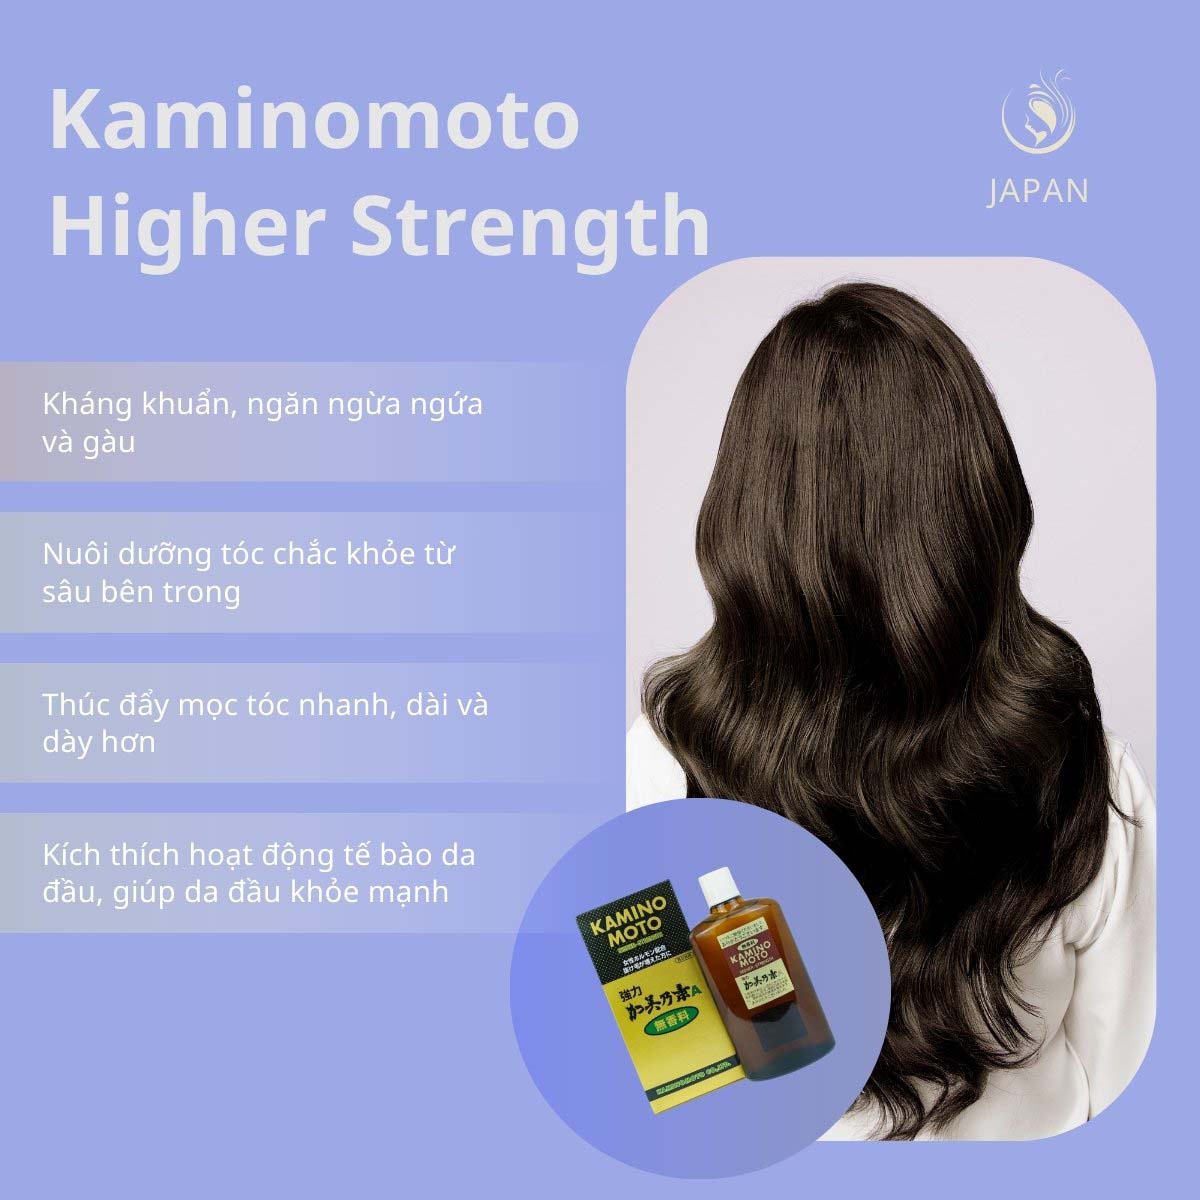 Kaminomoto Higher Strength